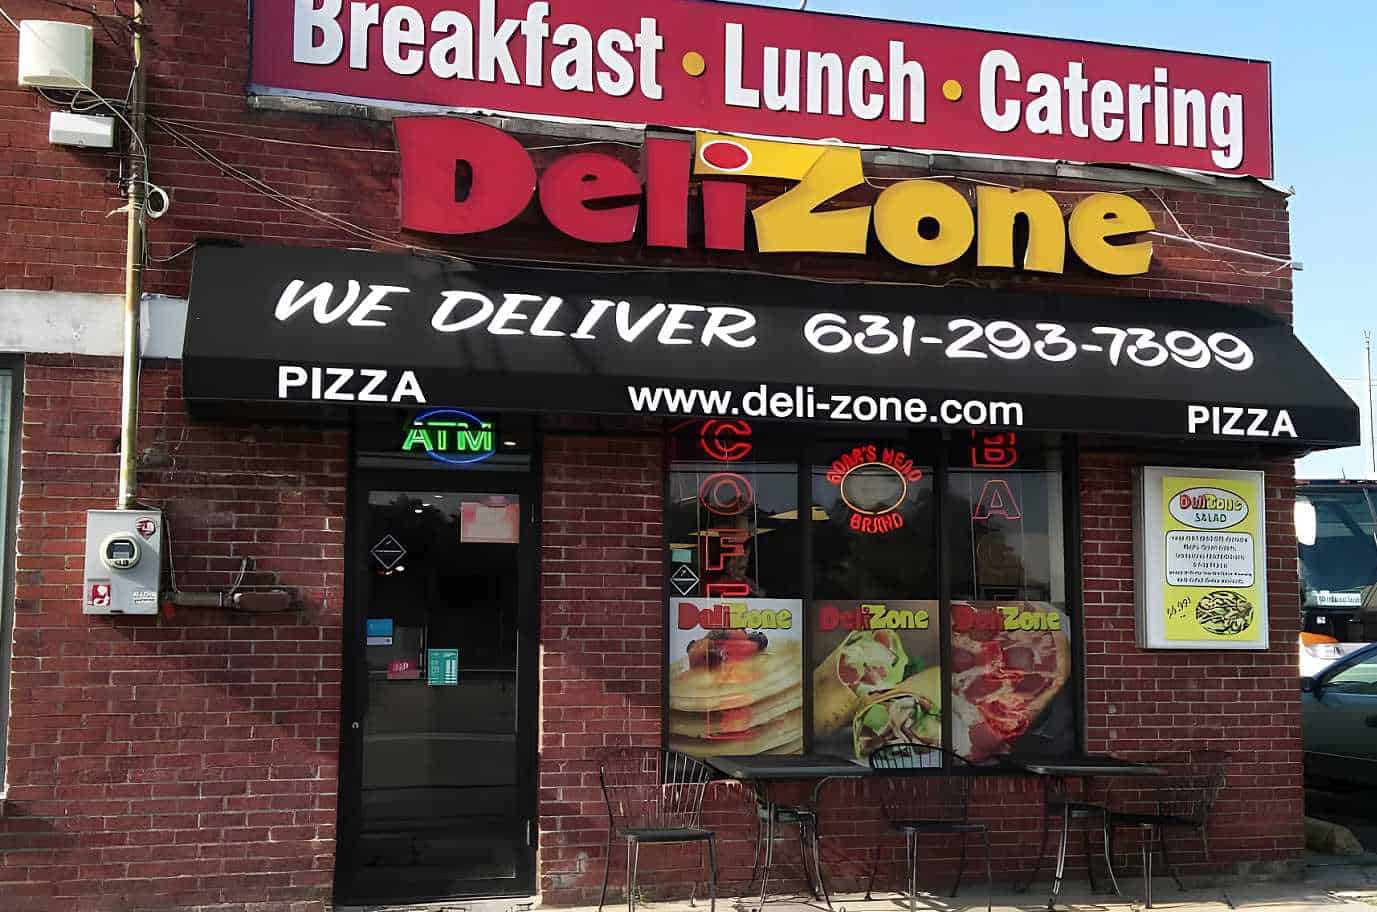 Deli Zone Gourmet Pizza & Catering Best Restaurants in Farmingdale, New York